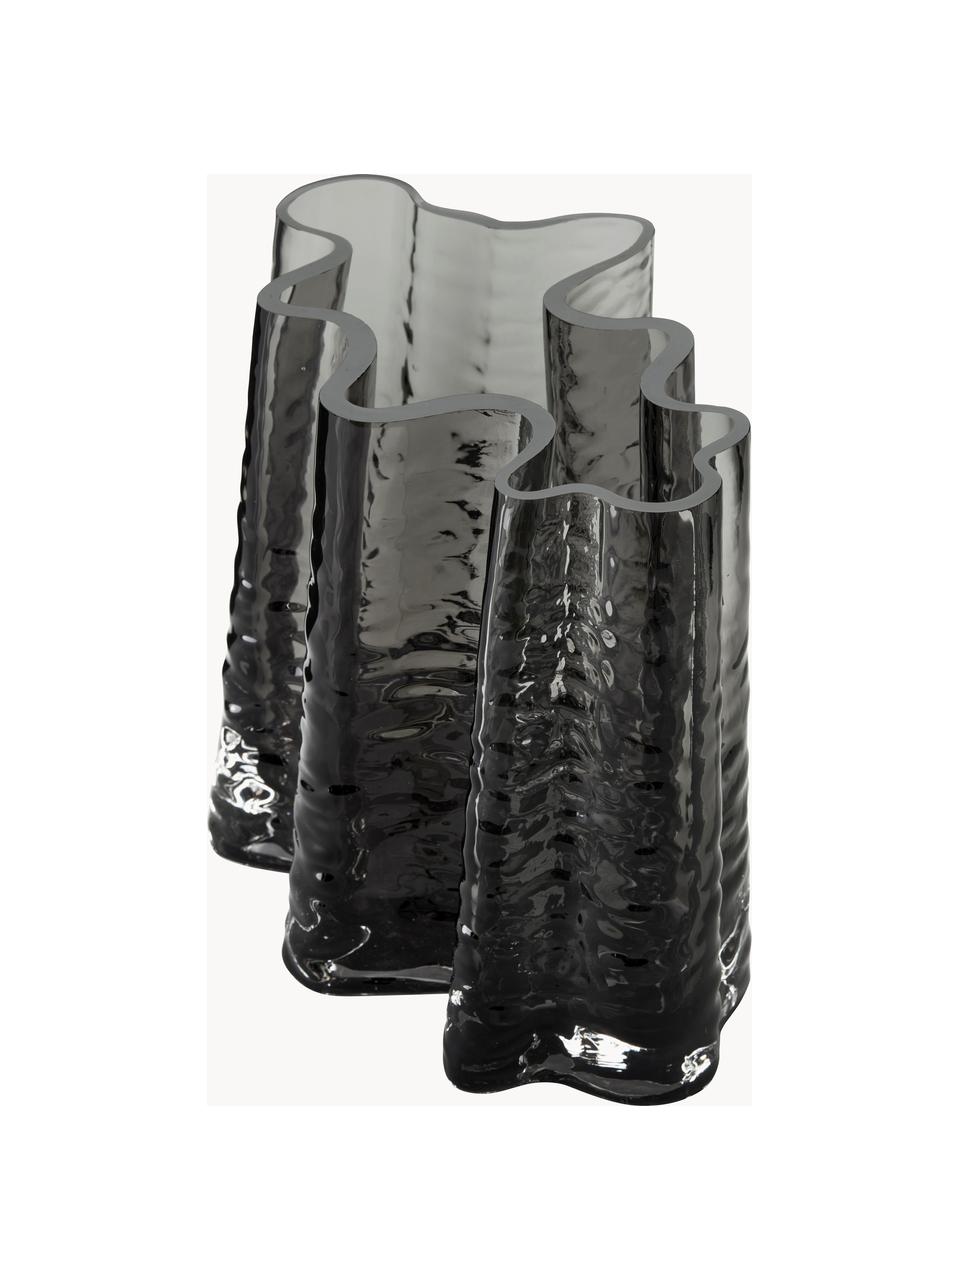 Mundgeblasene Glas-Vase Gry mit strukturierter Oberfläche, H 19 cm, Glas, mundgeblasen, Anthrazit, semi-transparent, B 24 x H 19 cm